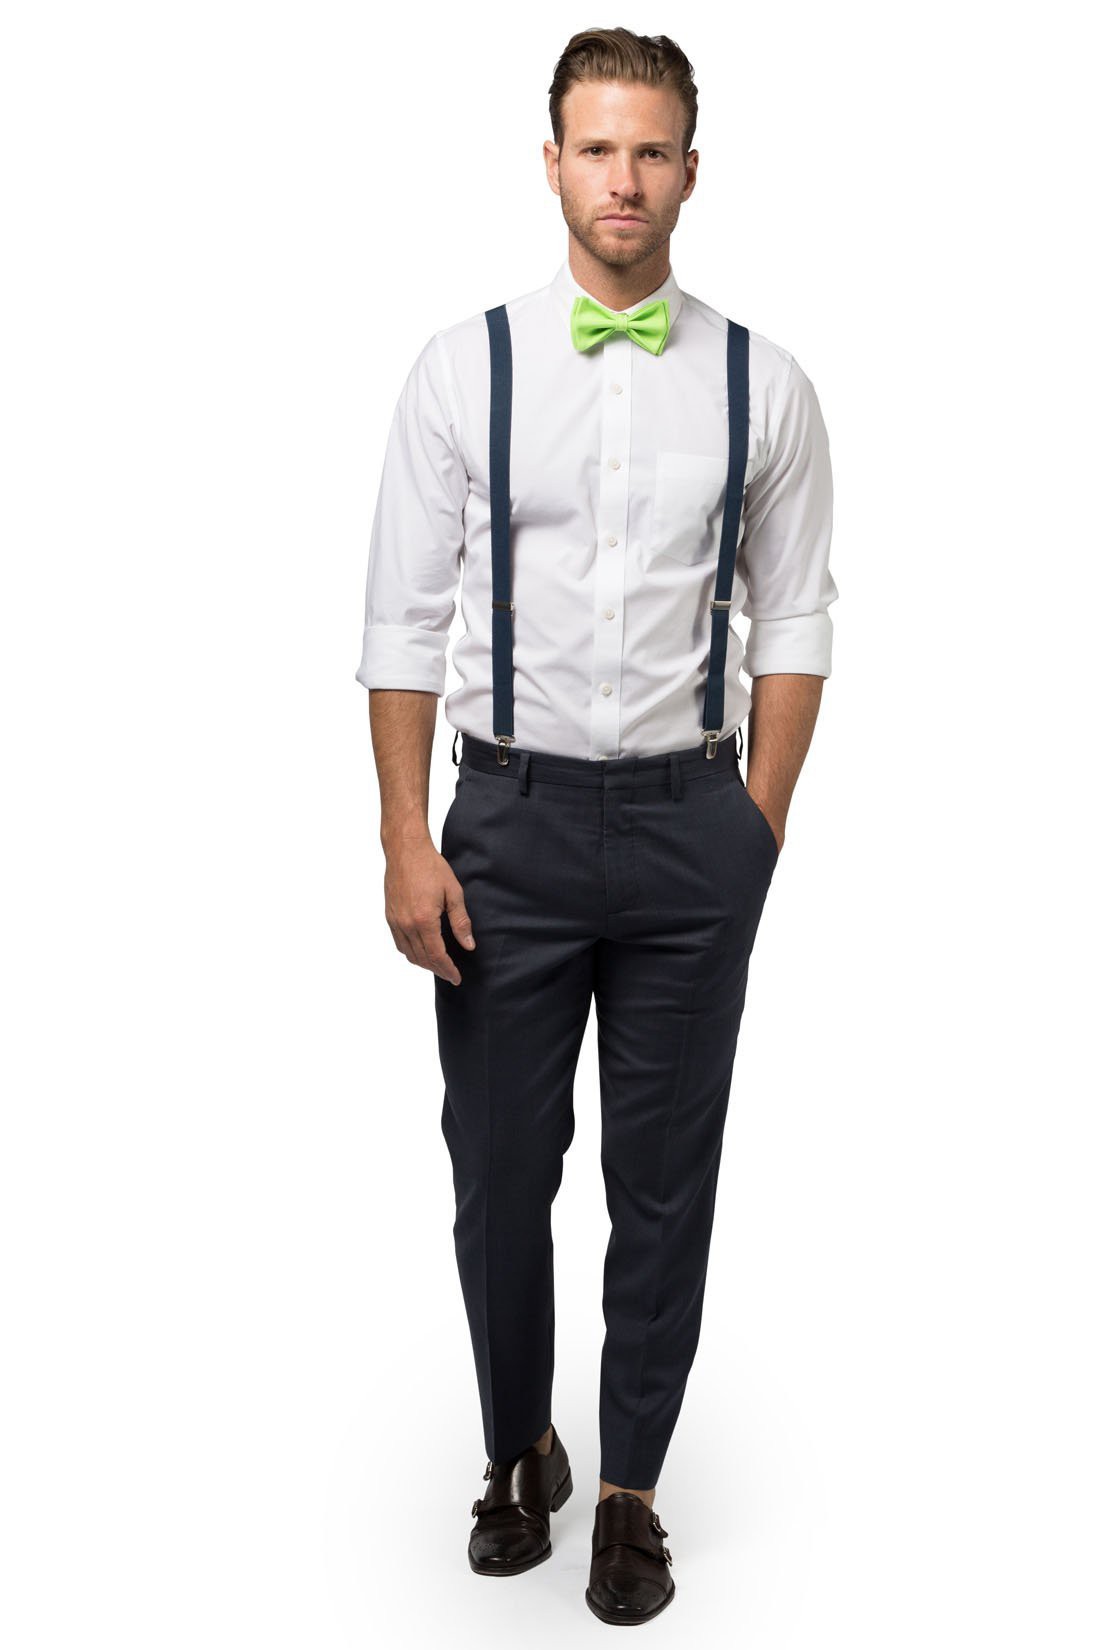 Navy Suspenders & Lime Bow Tie